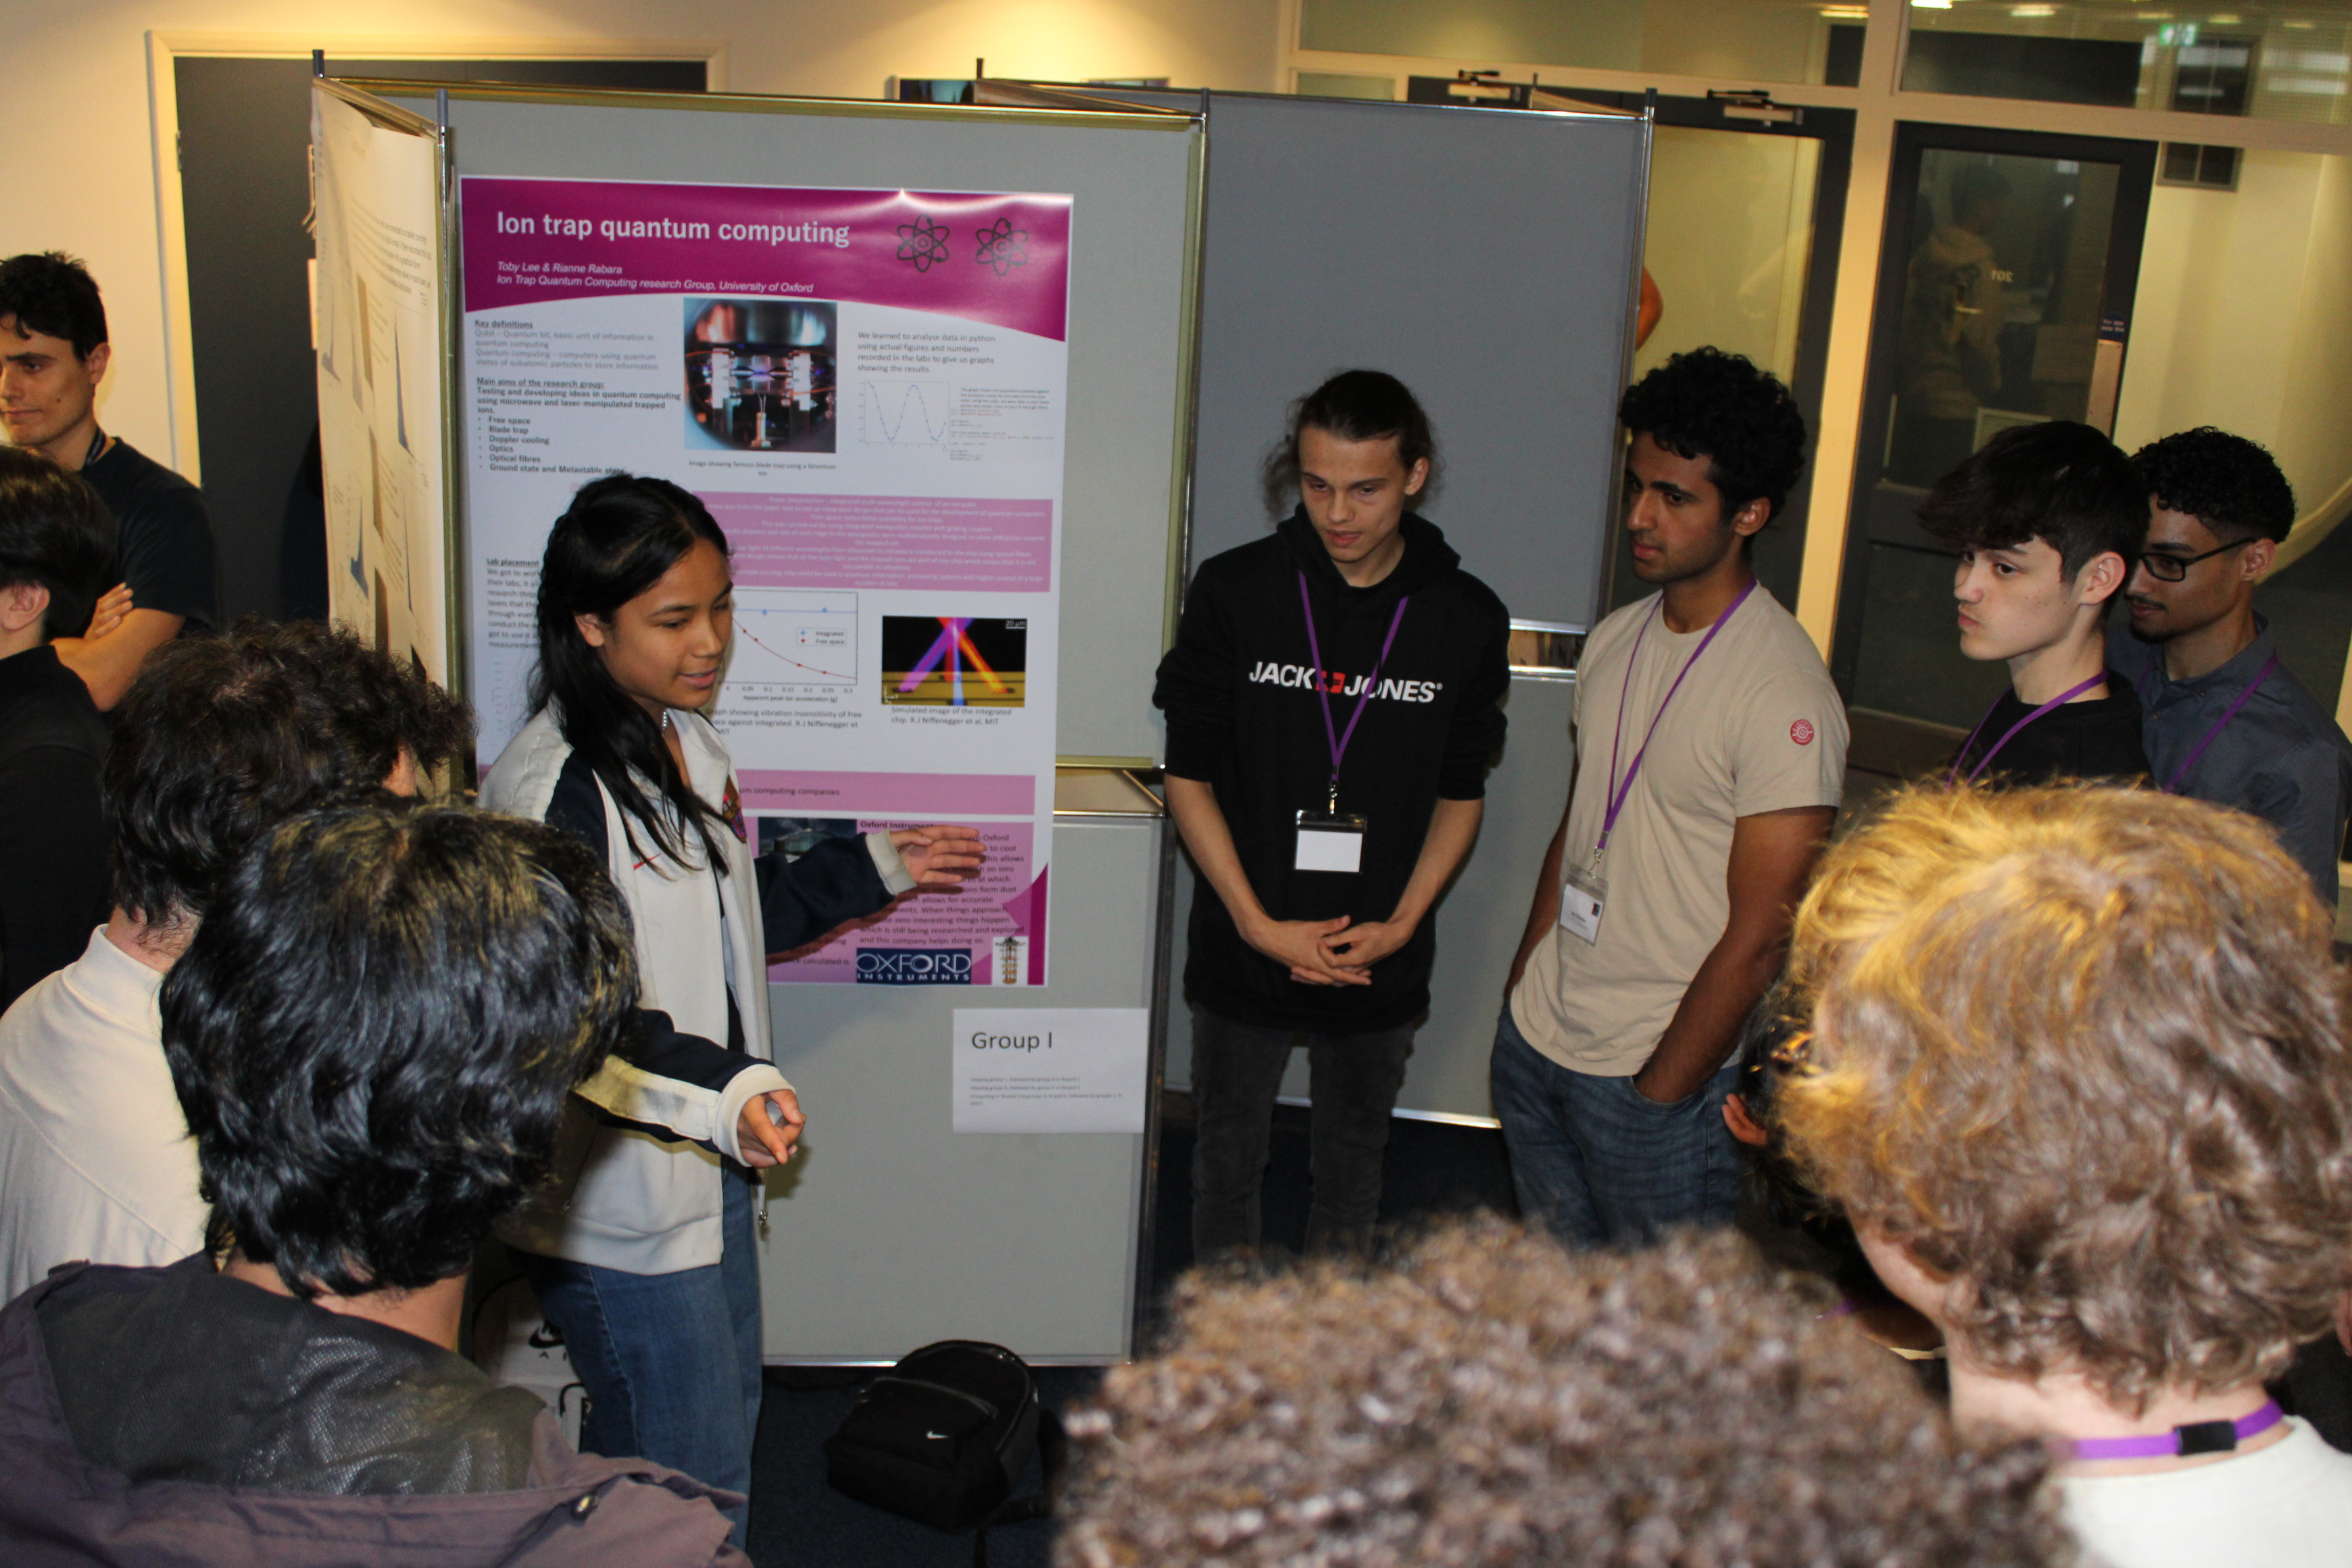 Students presenting at poster presentation